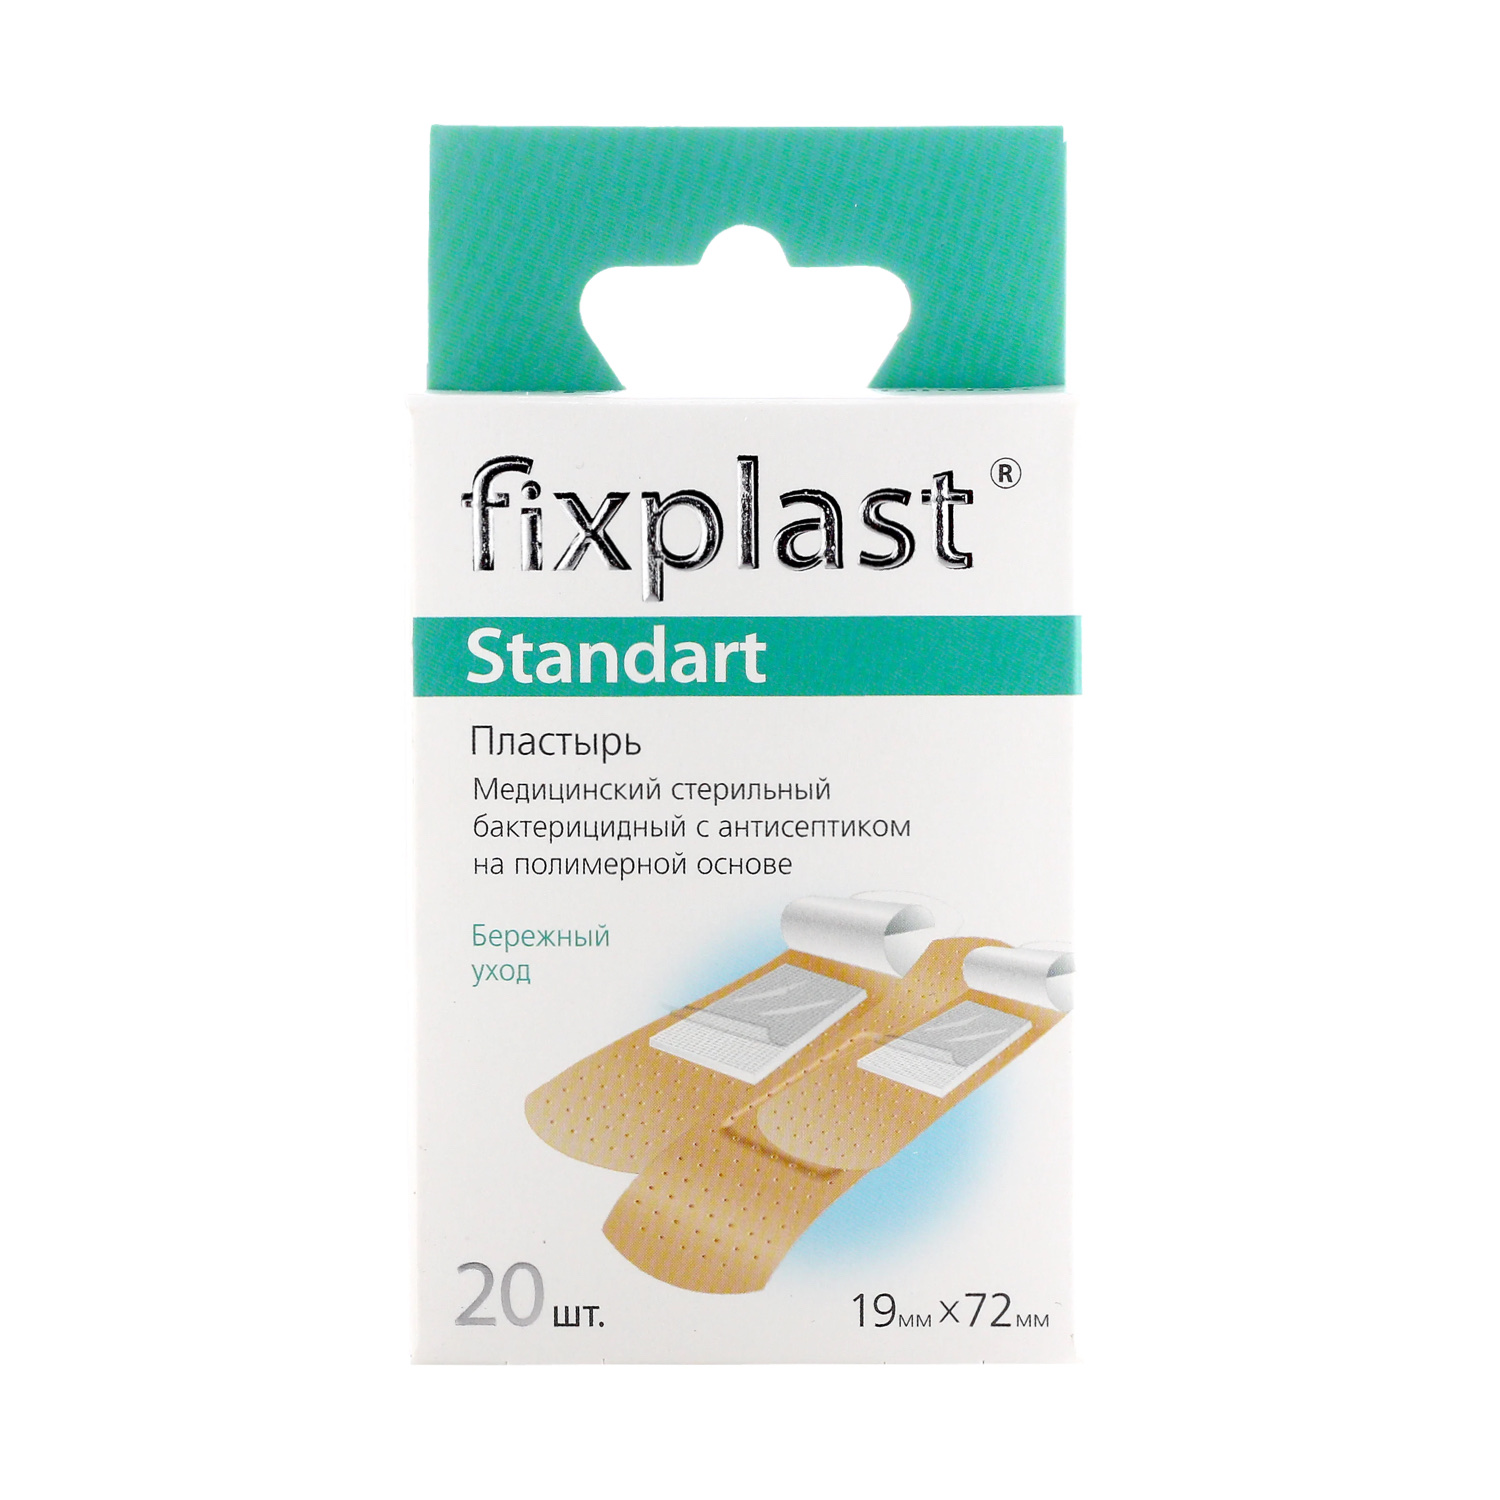 Fixplast Standart Пластырь мед. стер. с антисепт. бактерицид. на полимерн. основе N20 20шт 19*72мм